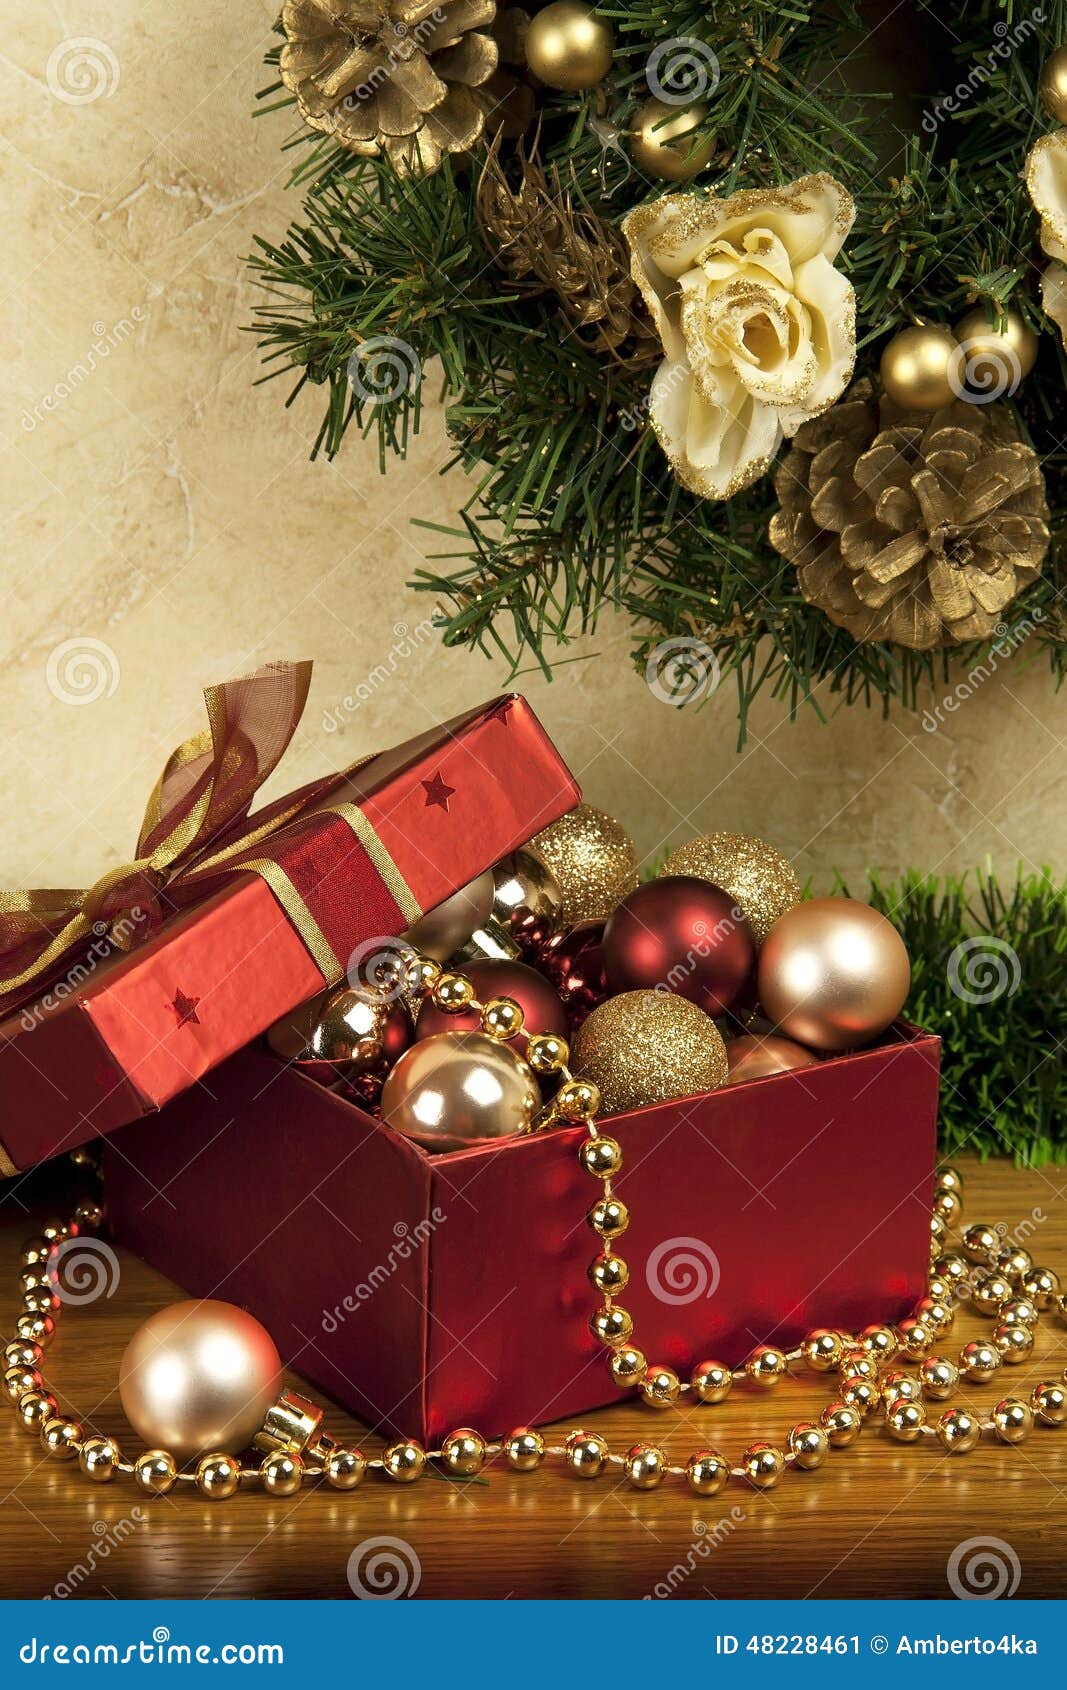 Christmas Still Life with Gift Box Stock Image - Image of calendar ...